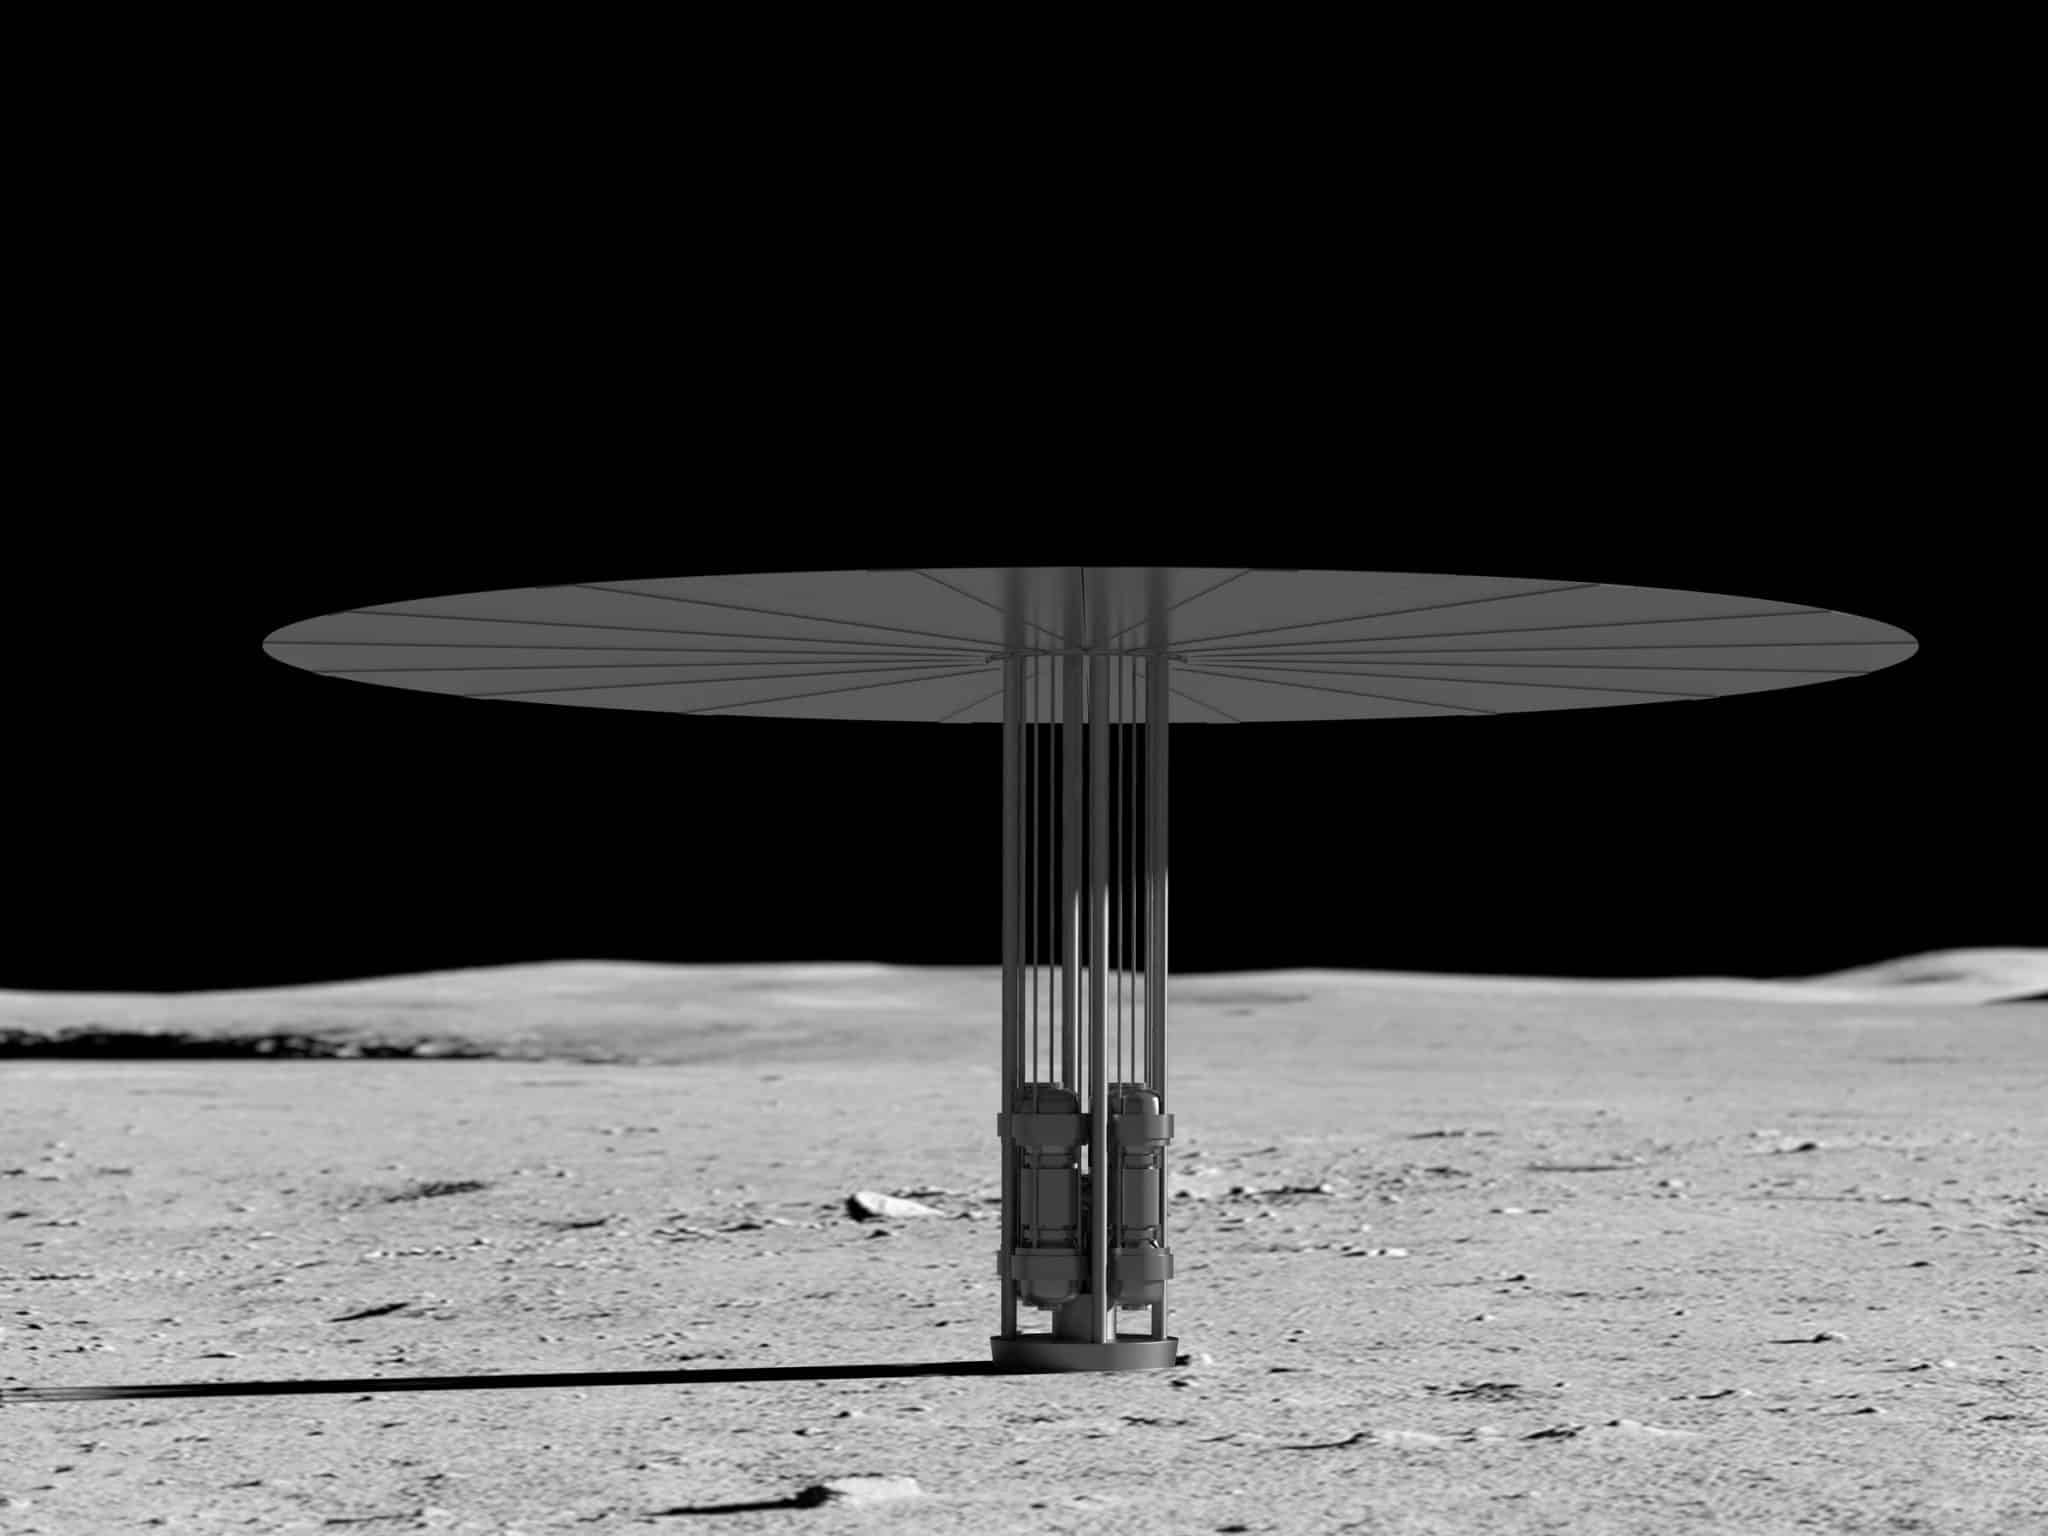 Nasa analisa possibilidades e parcerias para inserir reator nuclear na lua